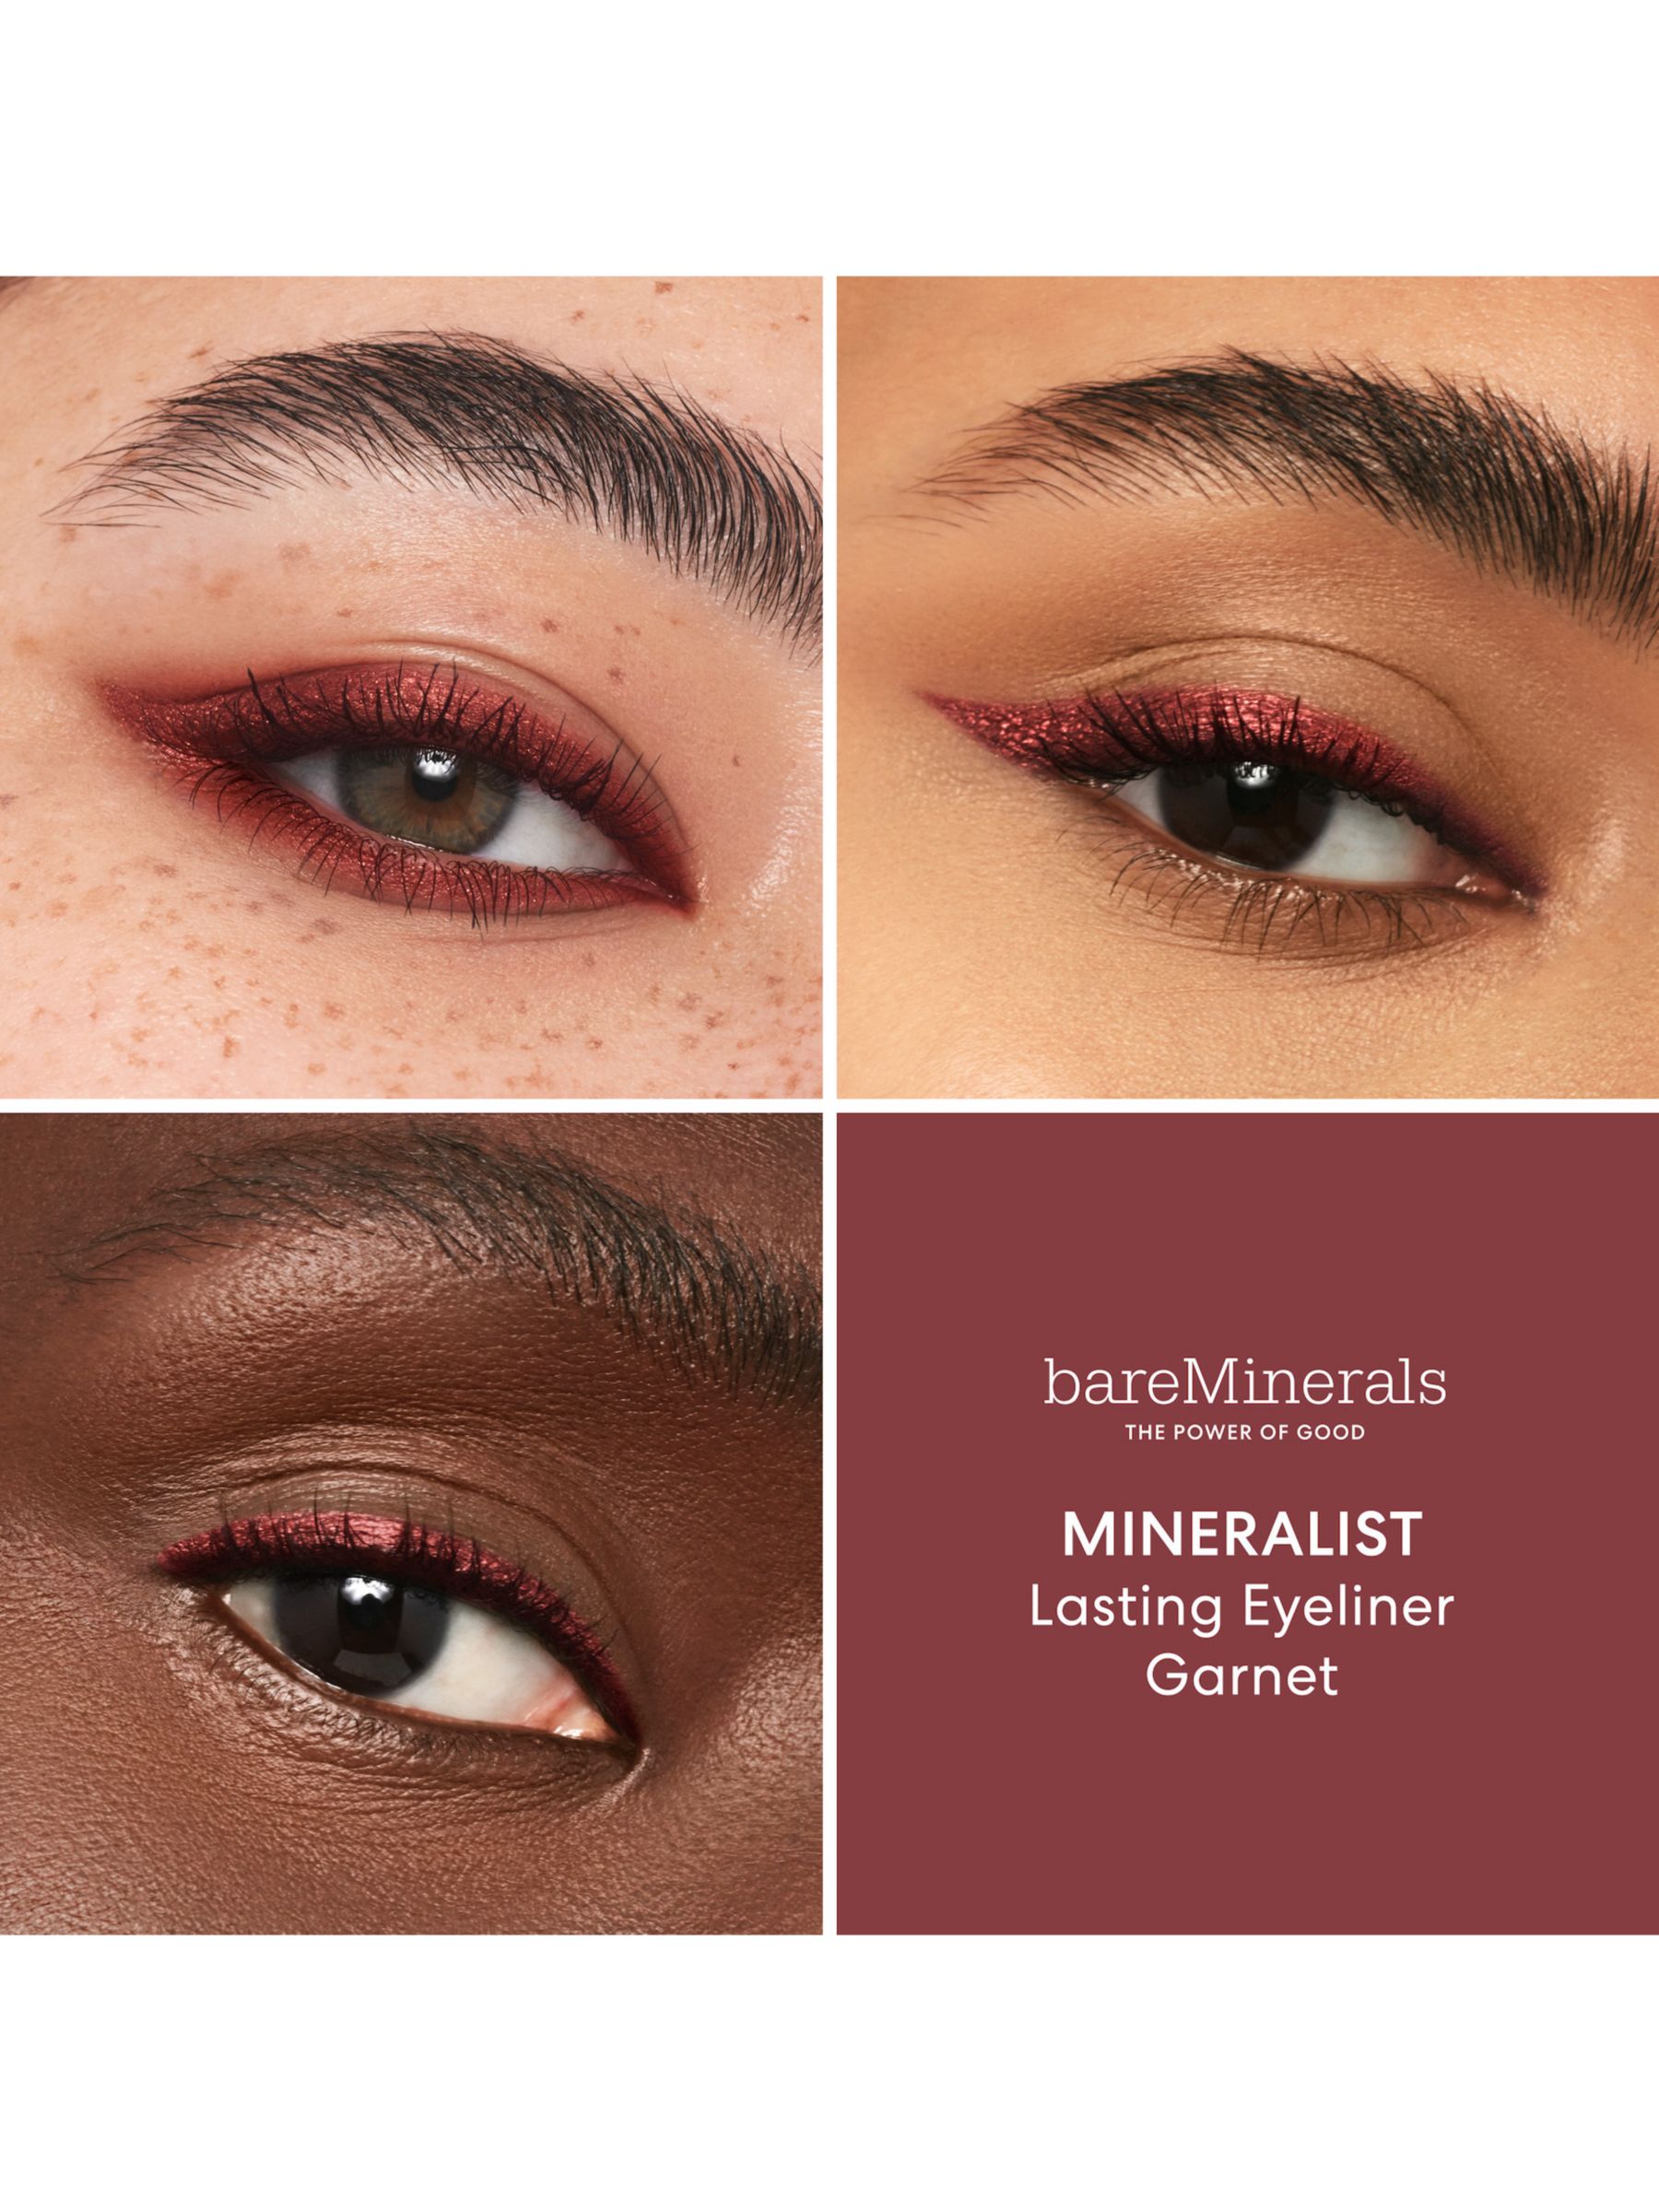 bareMinerals MINERALIST Lasting Eyeliner, Garnet 4